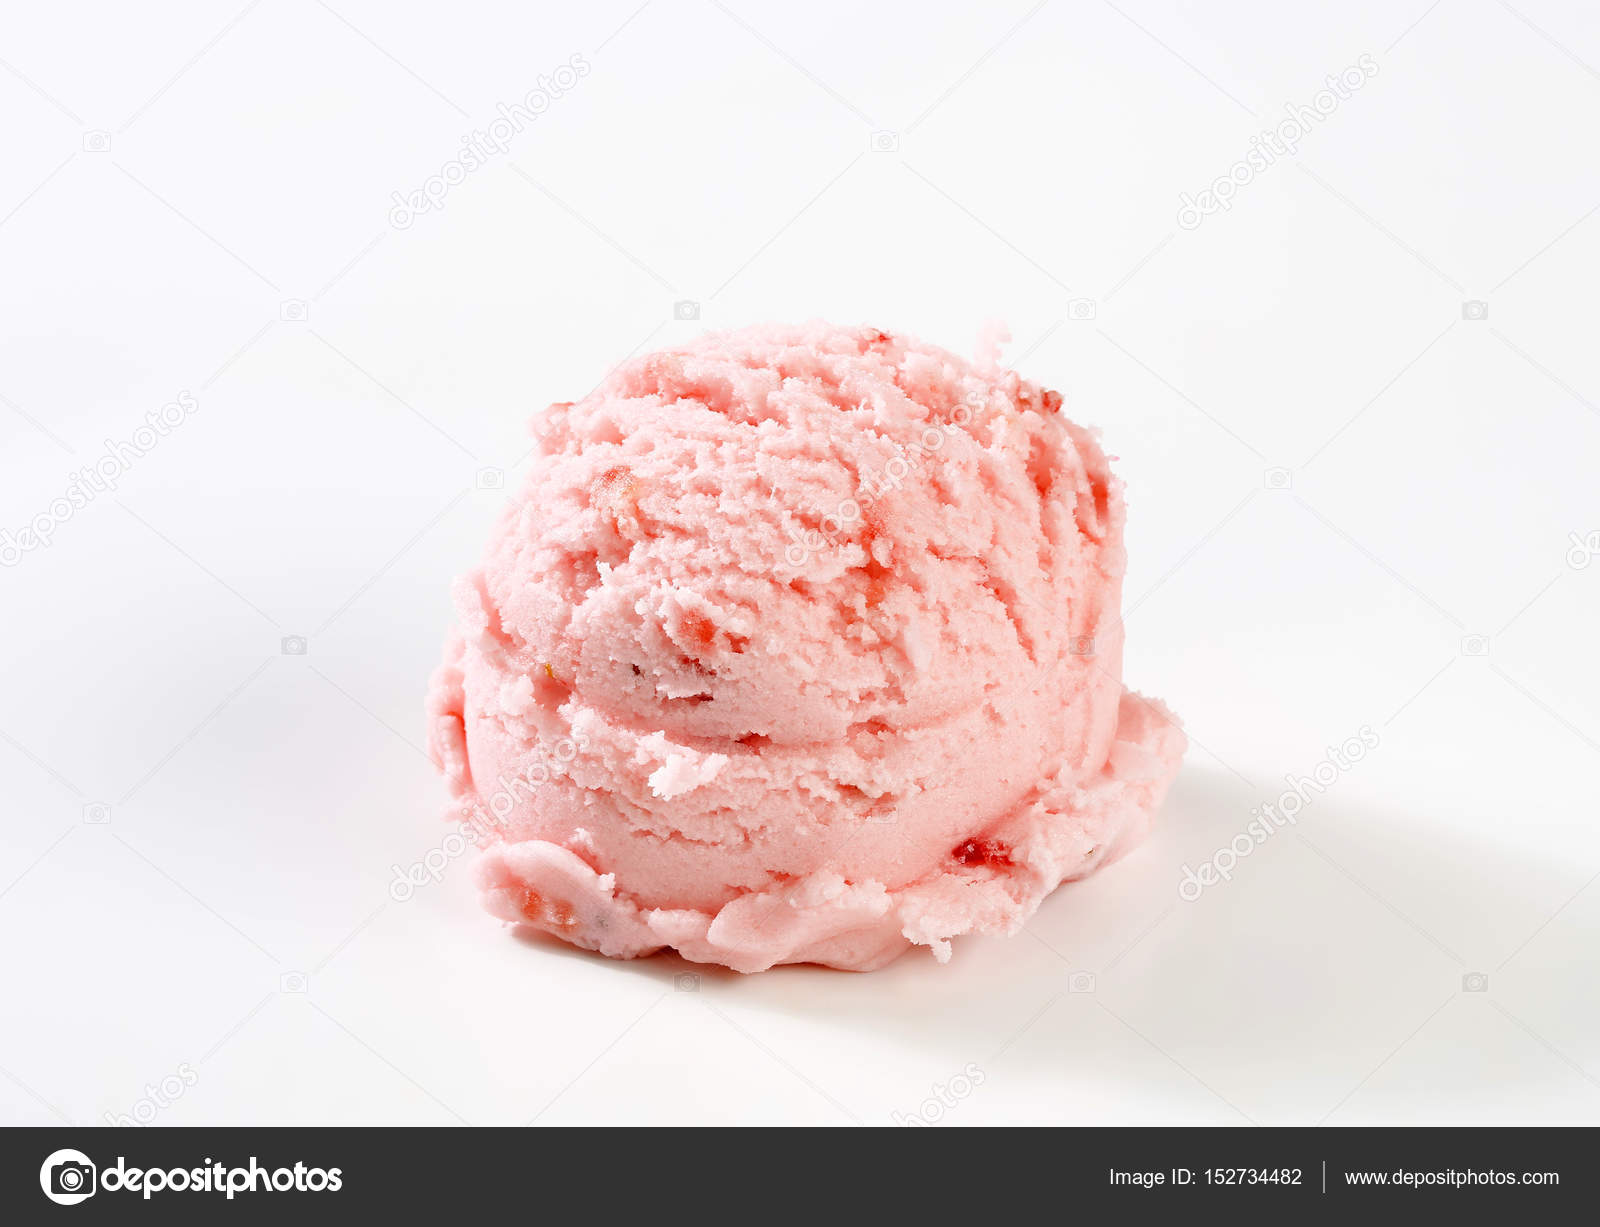 https://st3.depositphotos.com/1010050/15273/i/1600/depositphotos_152734482-stock-photo-scoop-of-pink-ice-cream.jpg